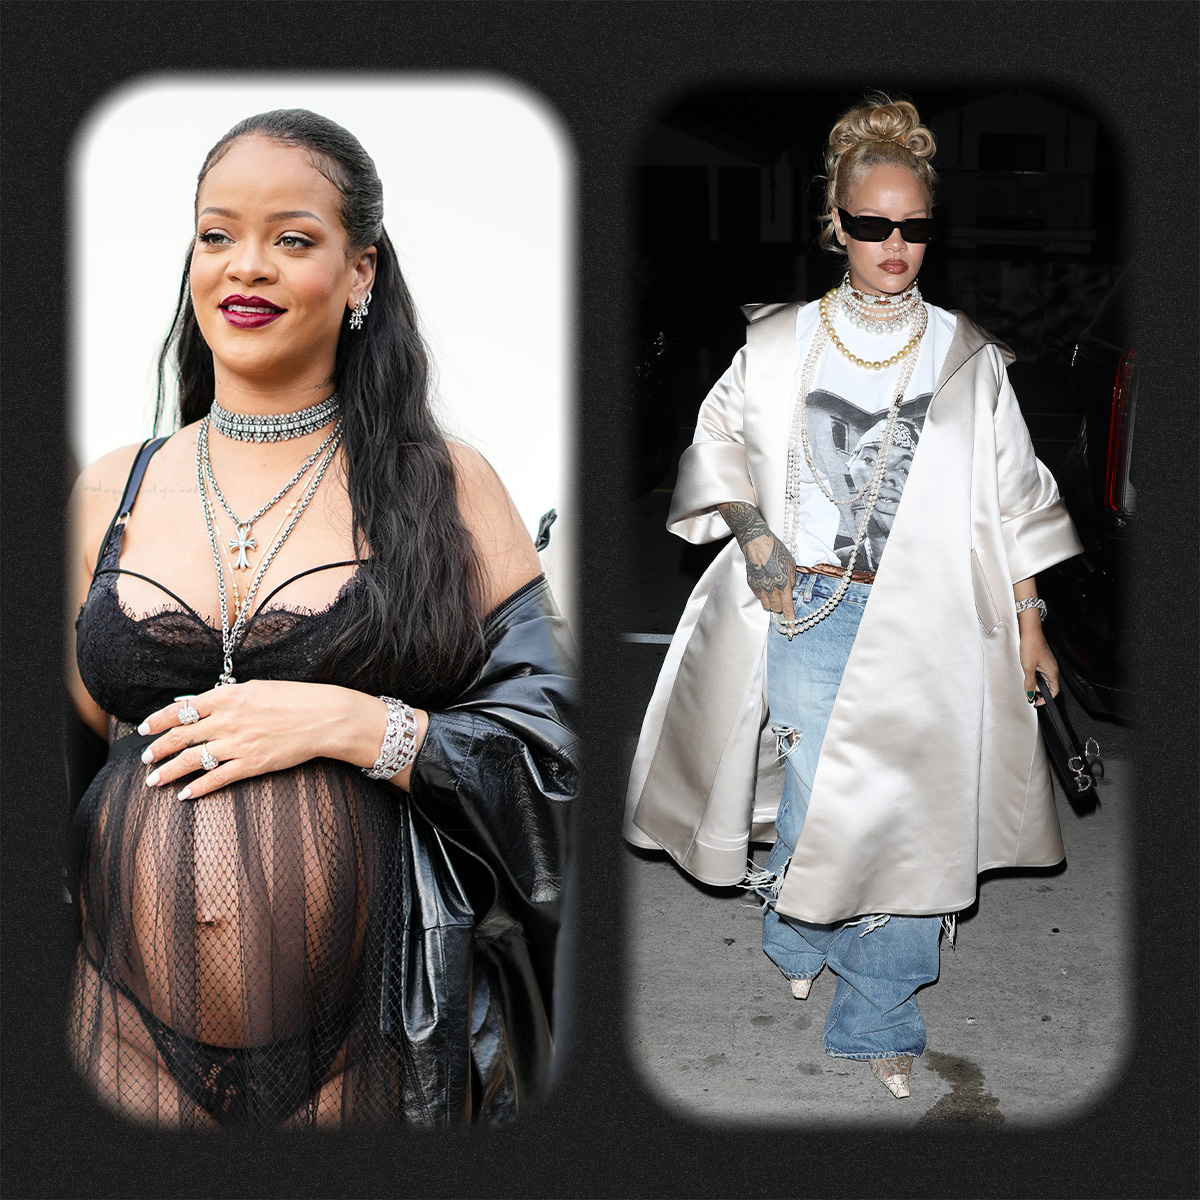 Rihanna wearing sheer dress while pregnant; Rihanna in a satin coat and jeans